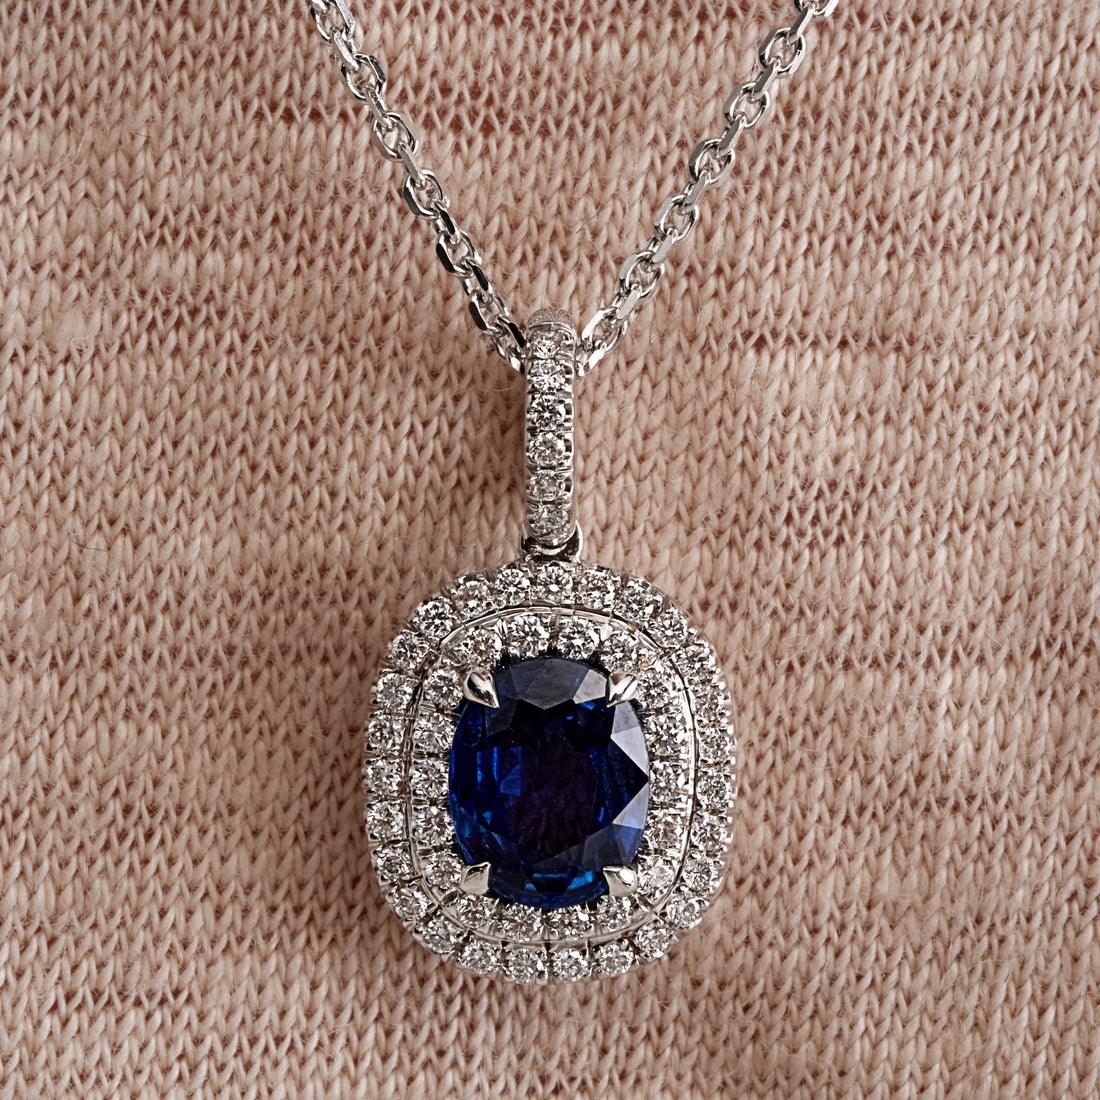 2.34 CT. Oval Cut Blue Sapphire and Round Brilliant Diamond Halo Pendant Necklace in 14k White Gold